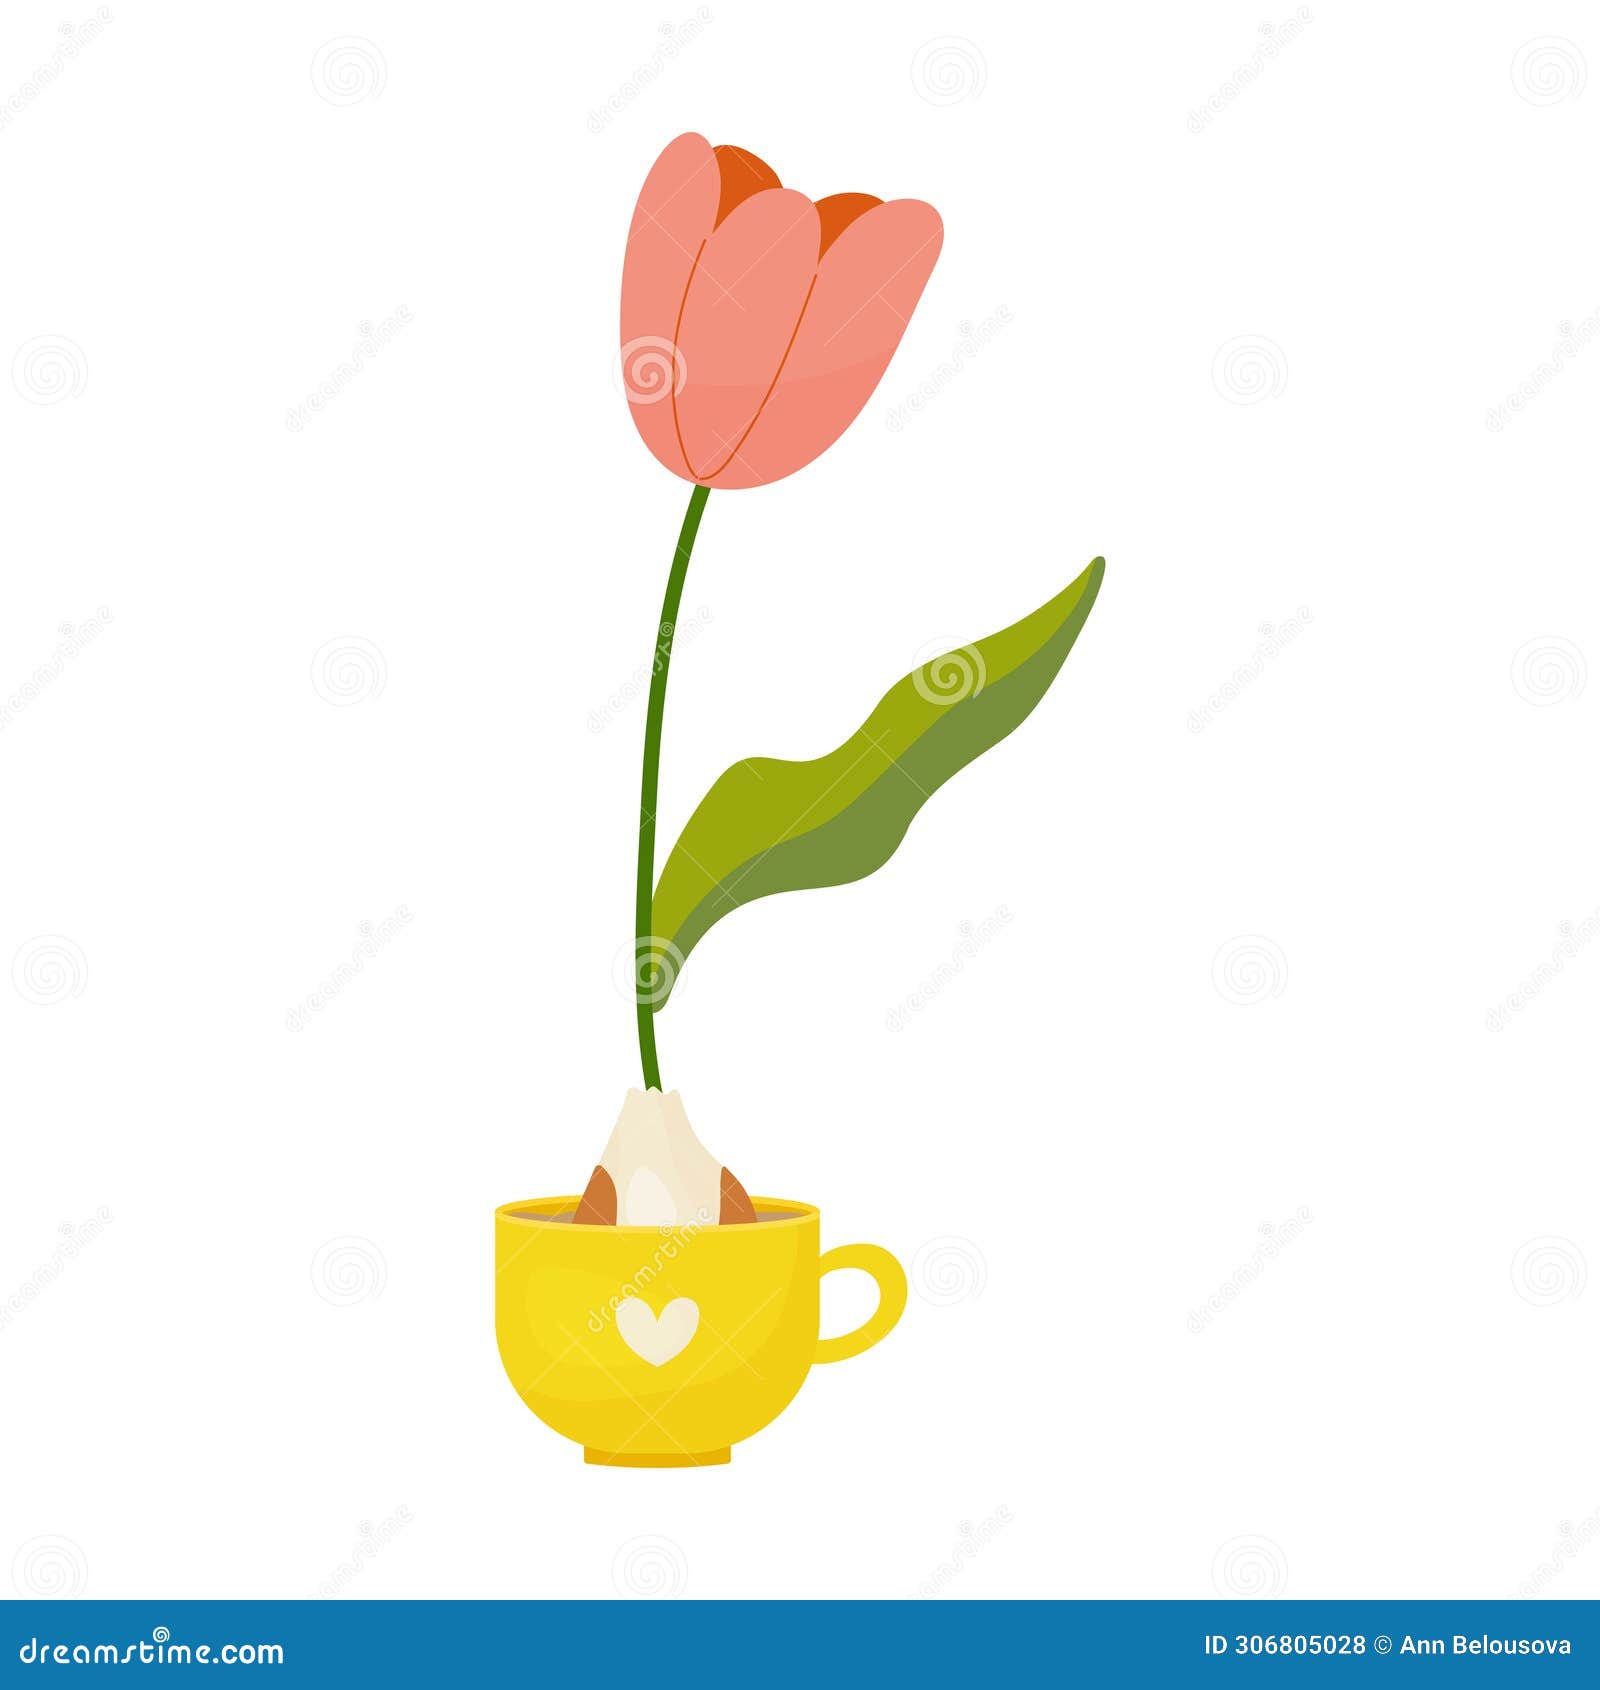 tulipan grown from bulb in mug, house flower, spring,  